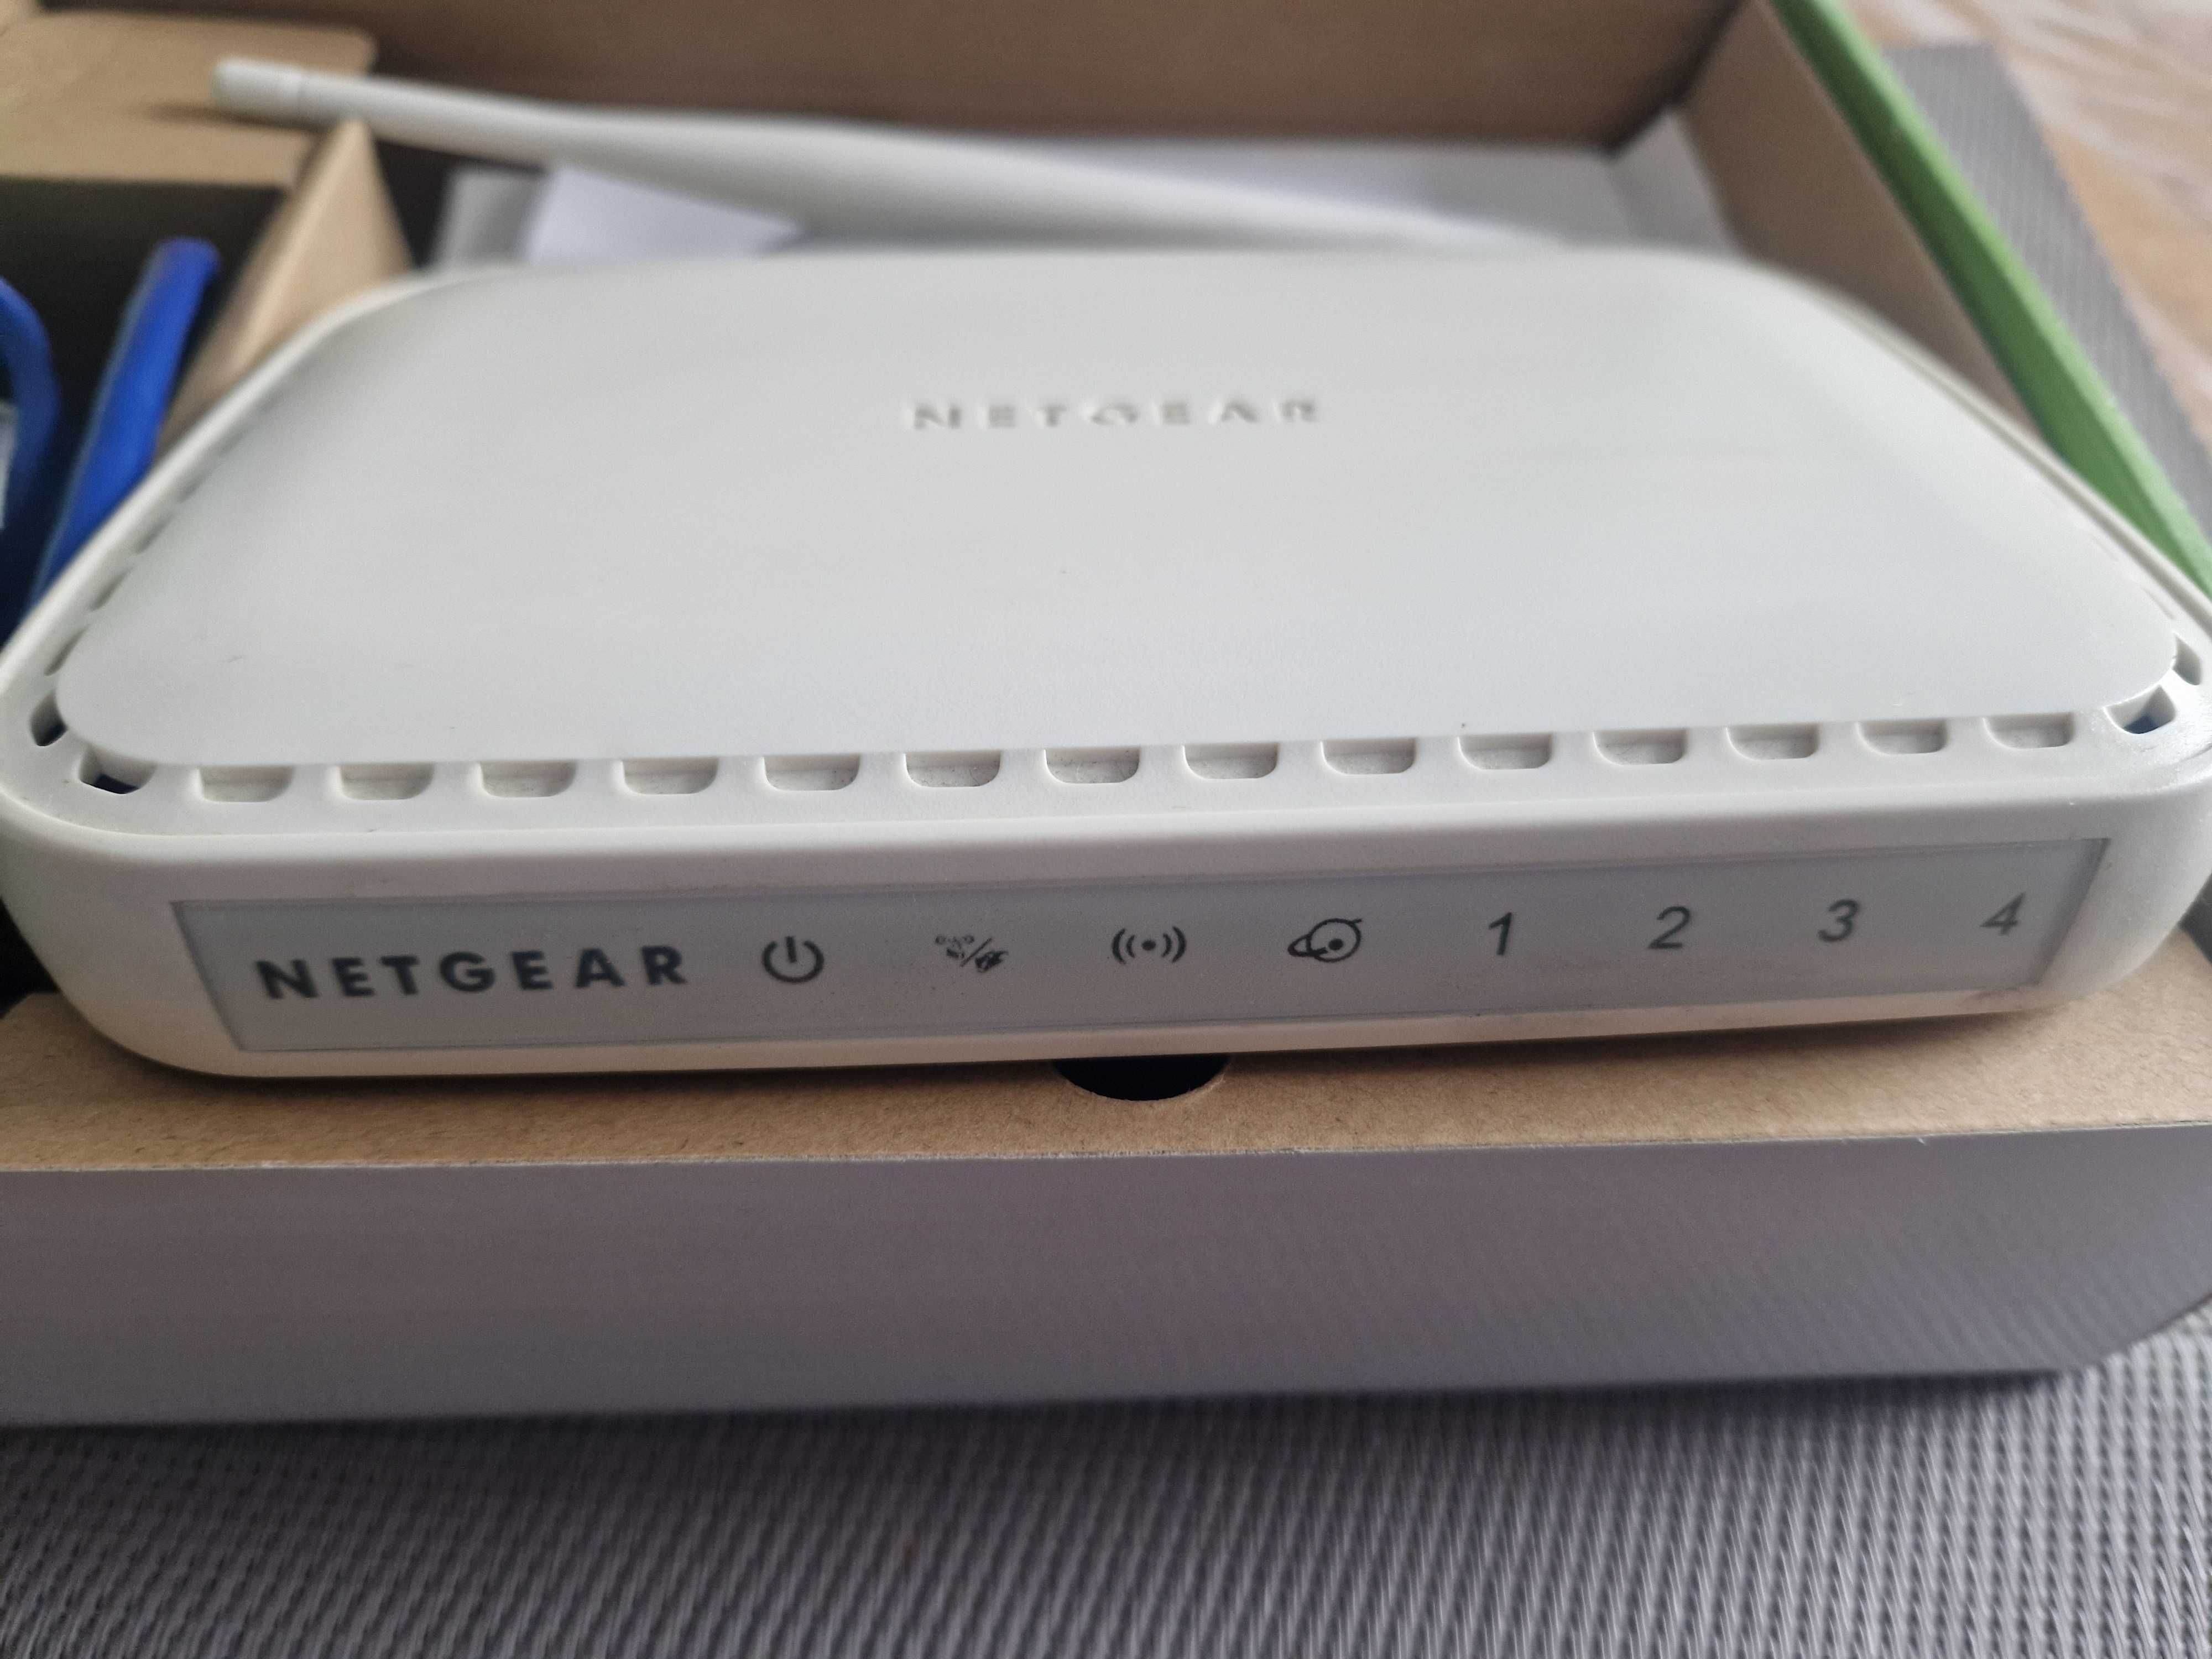 Router Netgear N150 wireless router